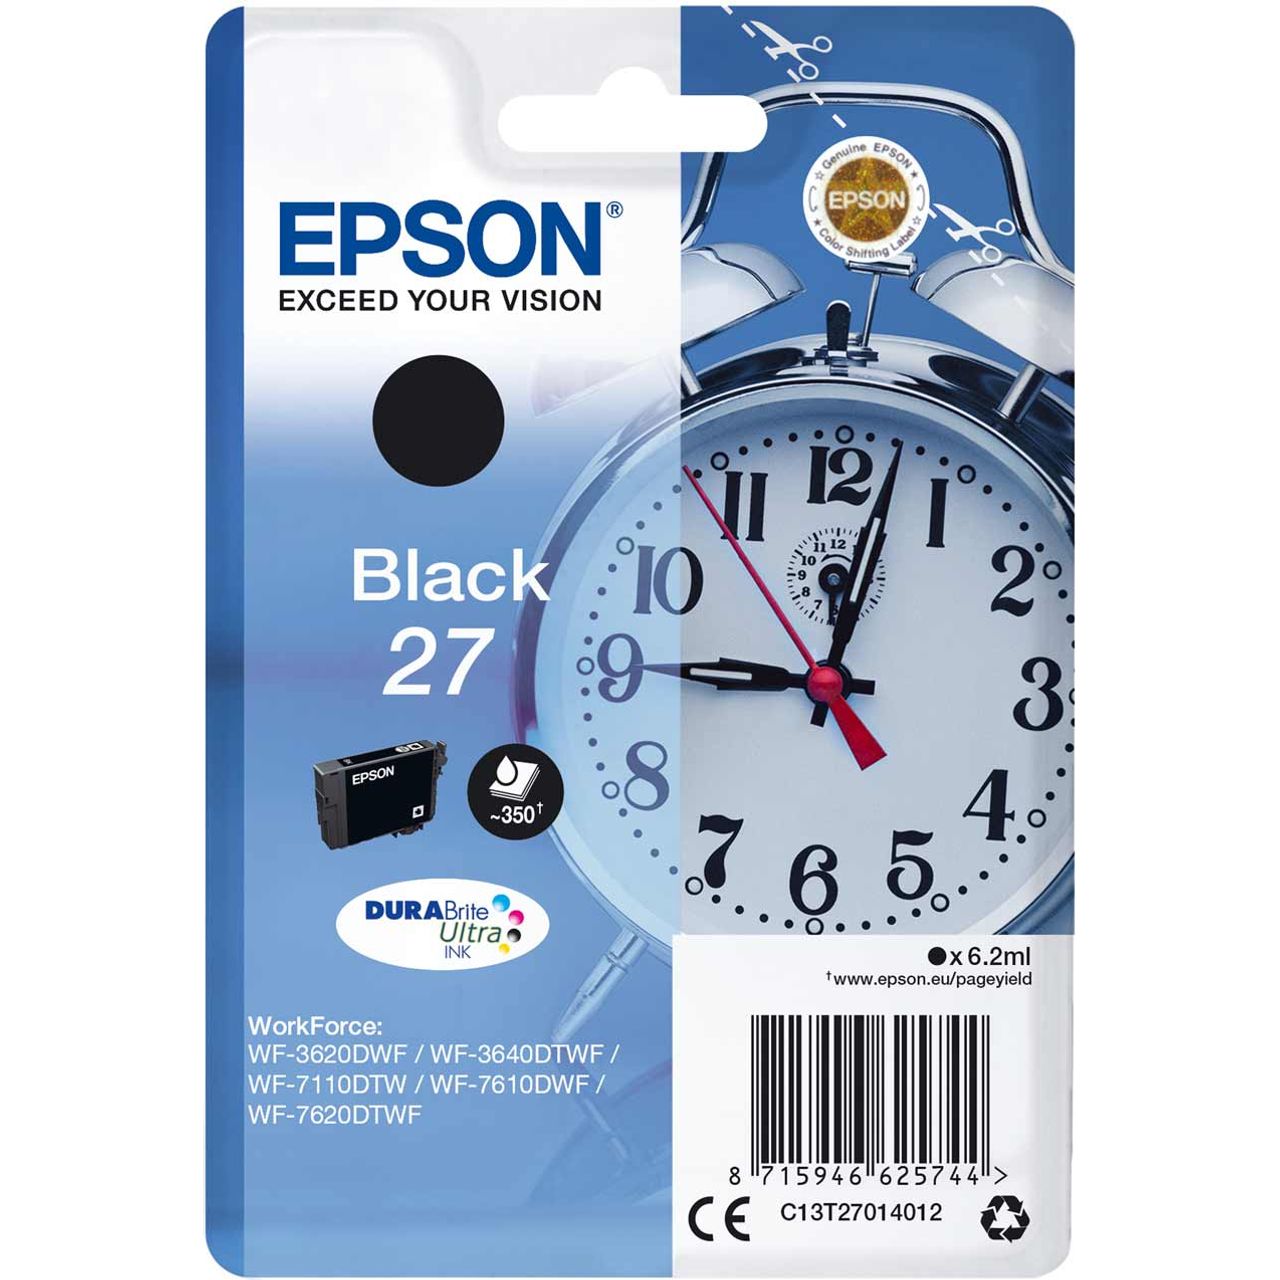 Epson Alarm Clock Singlepack Black 27 DURABrite Ultra Ink Cartridge Review